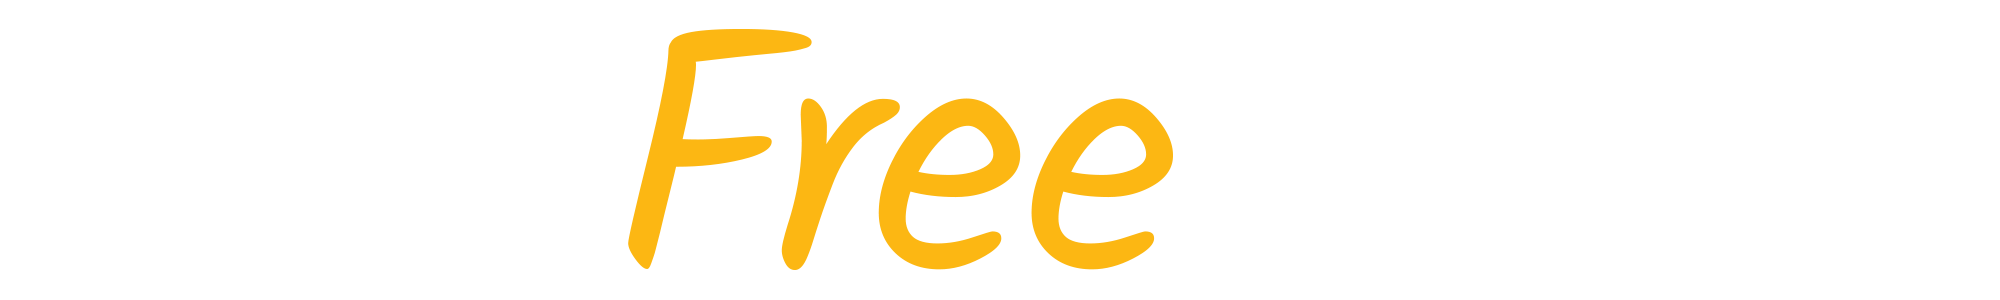 Fee Free Tafe Logo